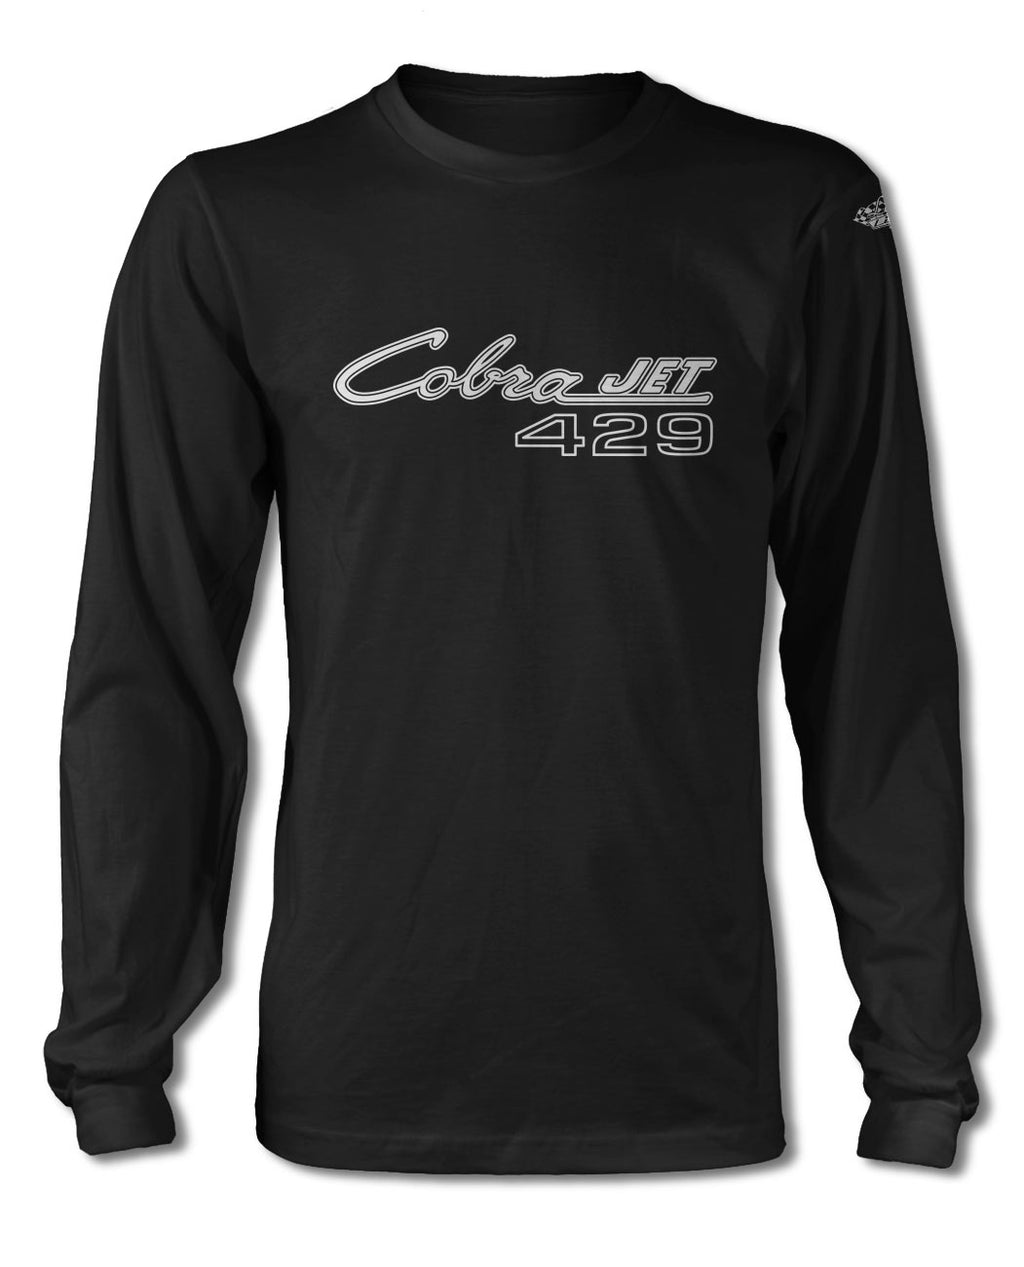 Cobra Jet 429 c.i. V8 Engine Emblem 1968 - 1970 T-Shirt - Long Sleeves - Emblem